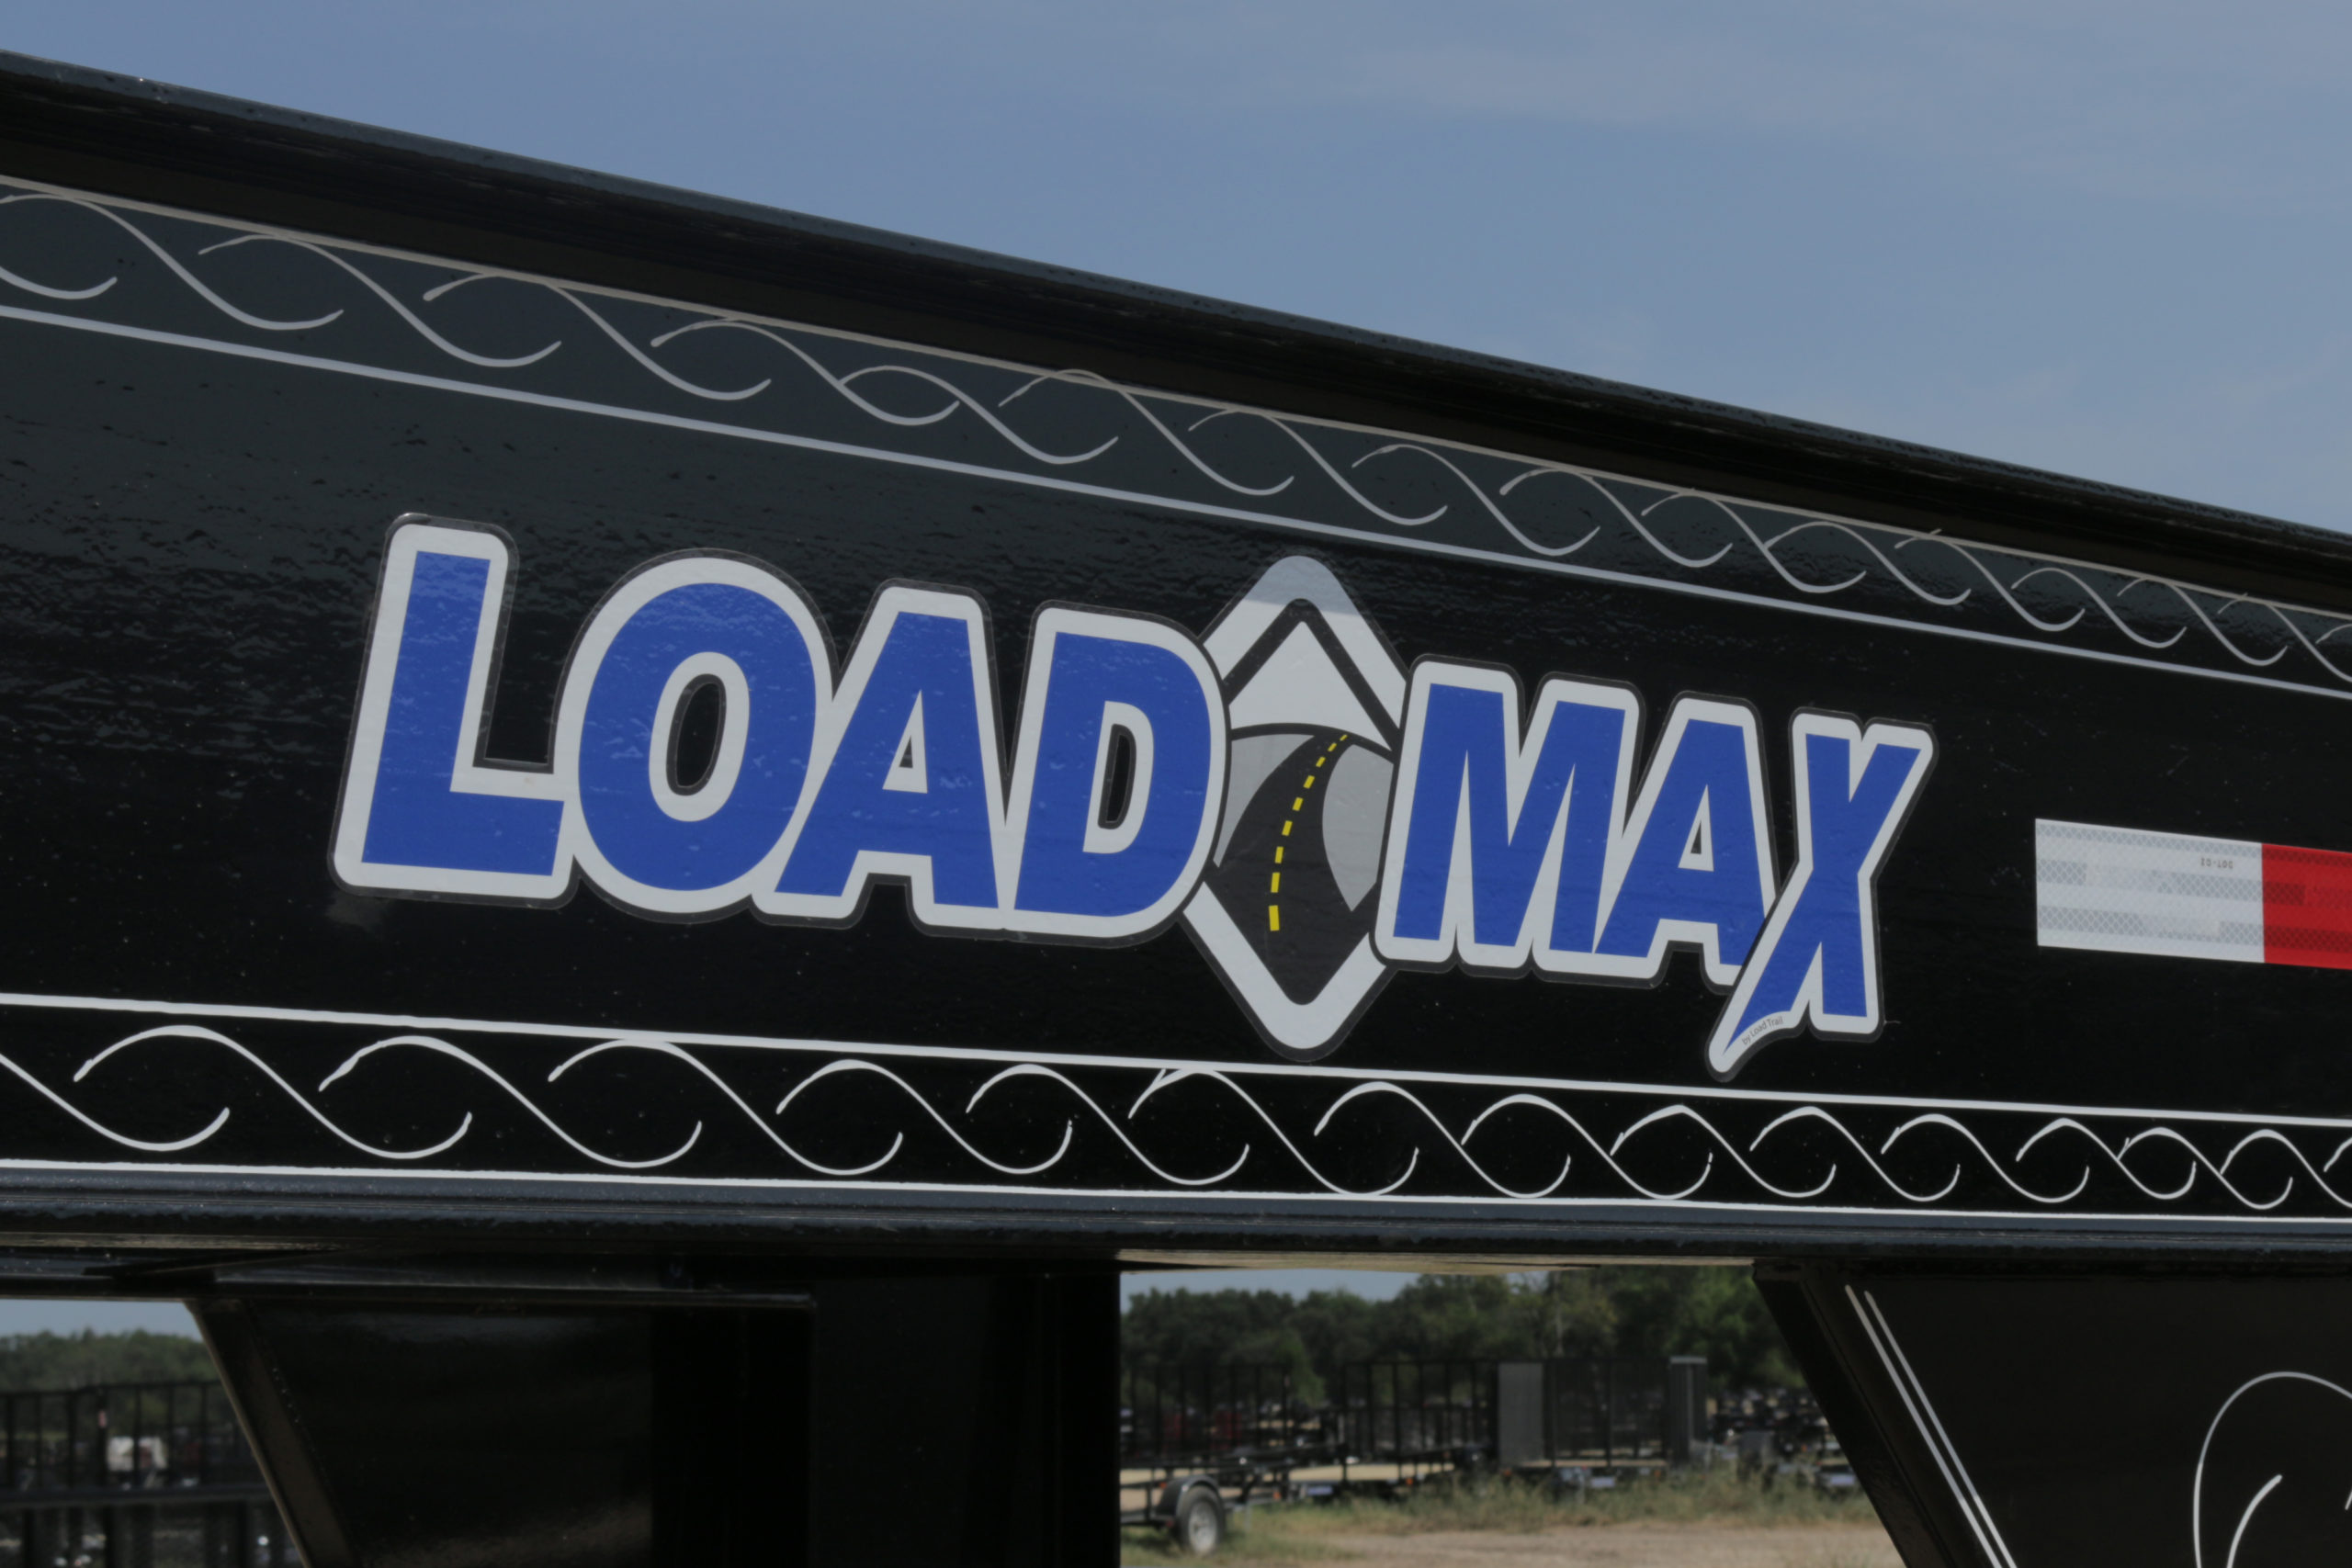 Load Max